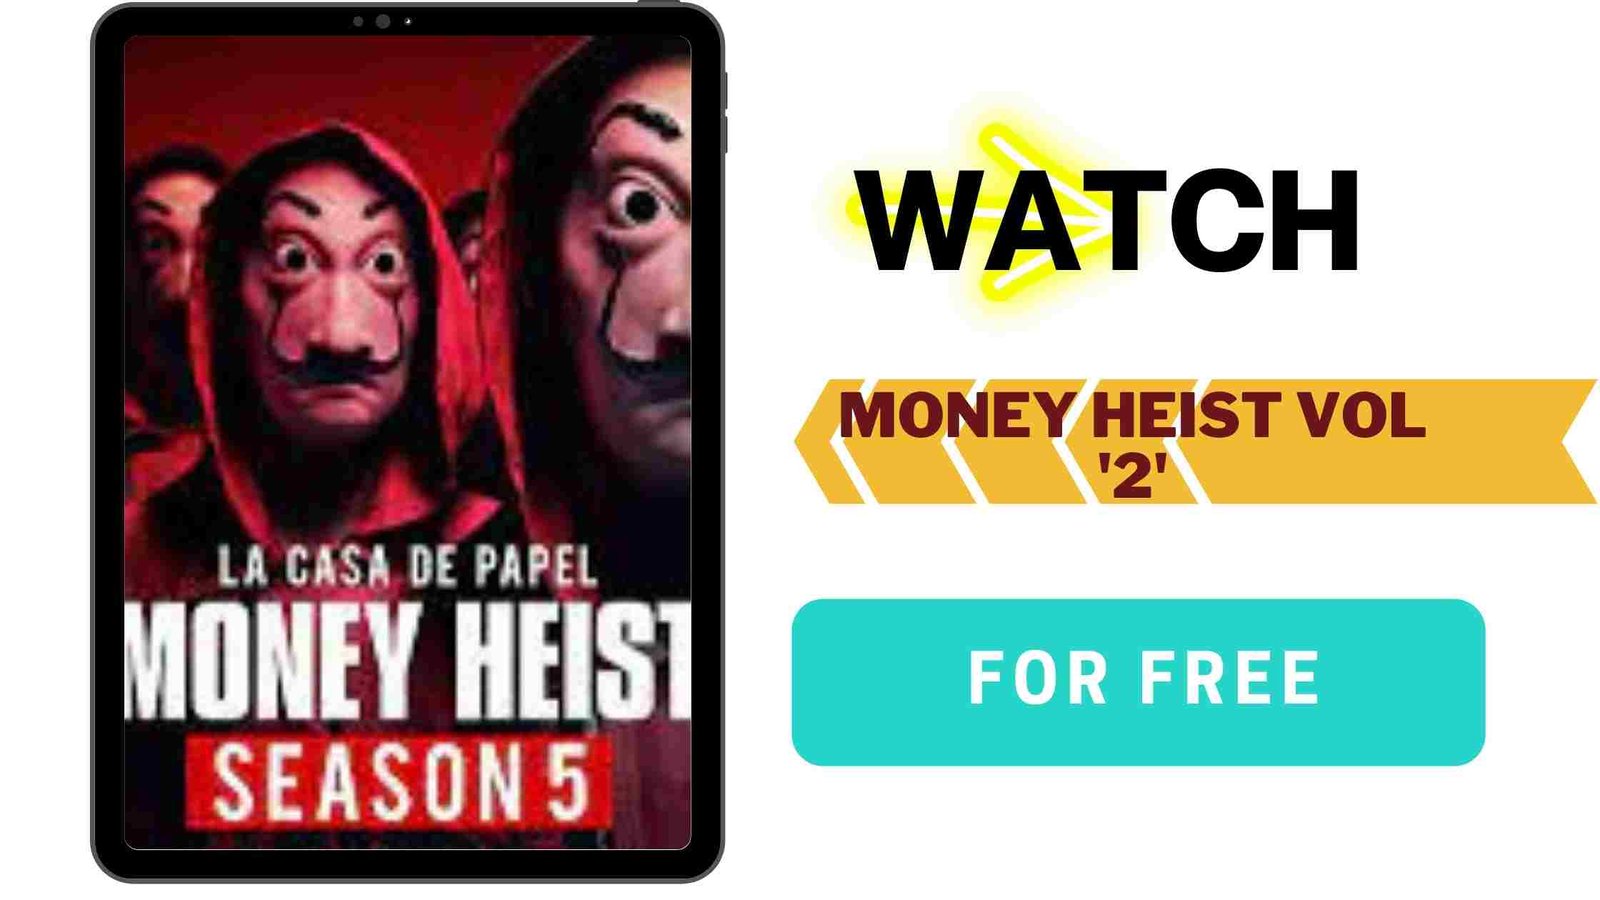 how to watch money heist season 5 vol 2